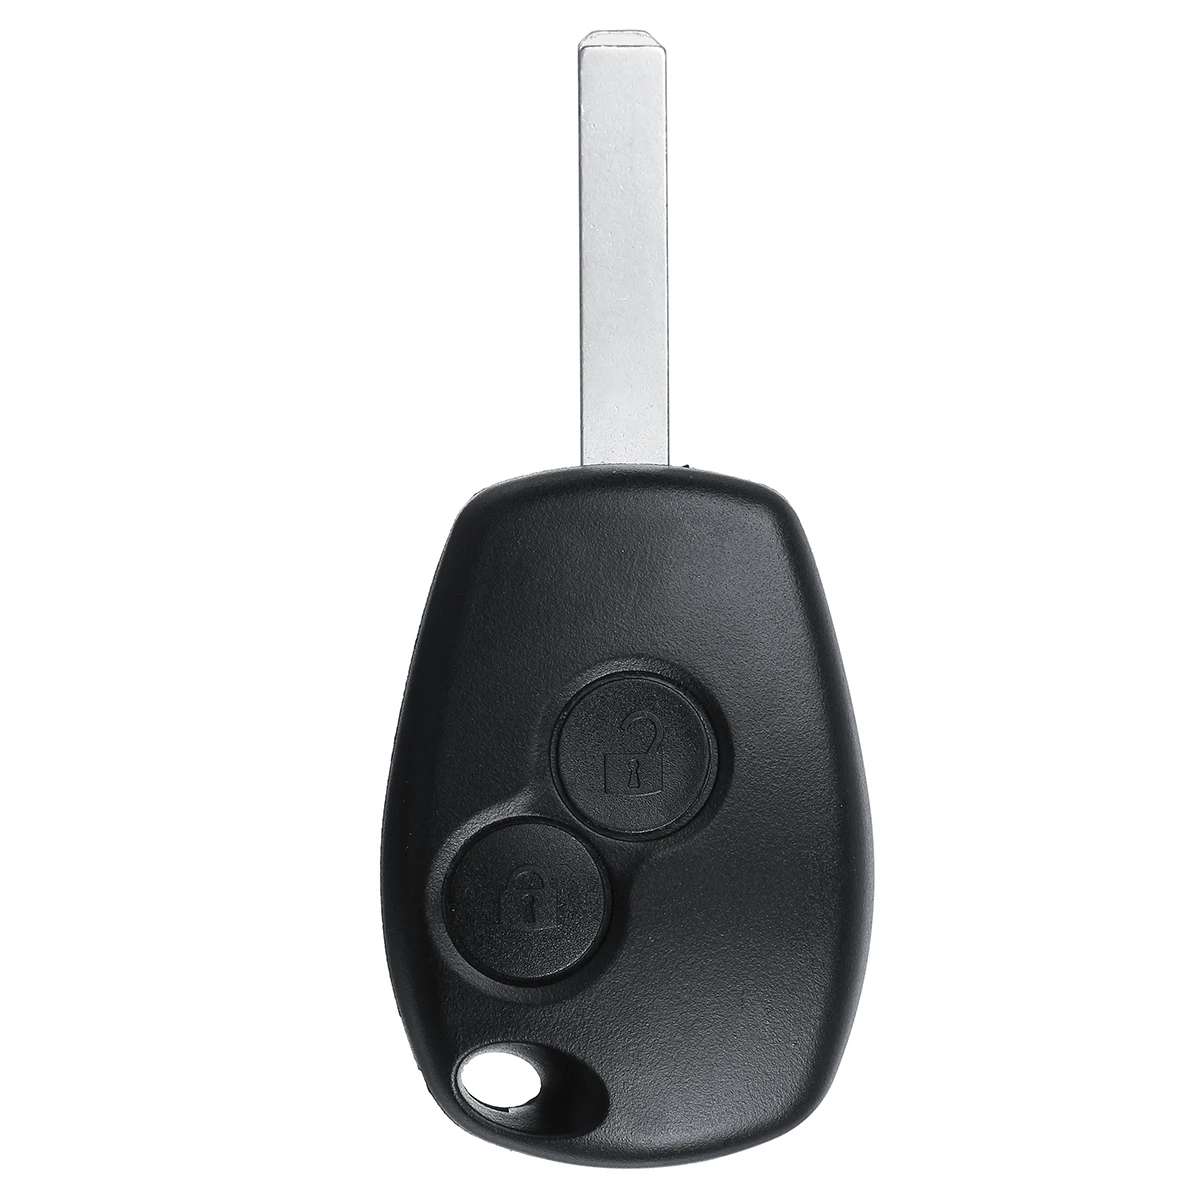 2 Button Remote Car Key Fob Case with Key Blank 7701209235 For Renault Clio Twingo Kangoo Modus